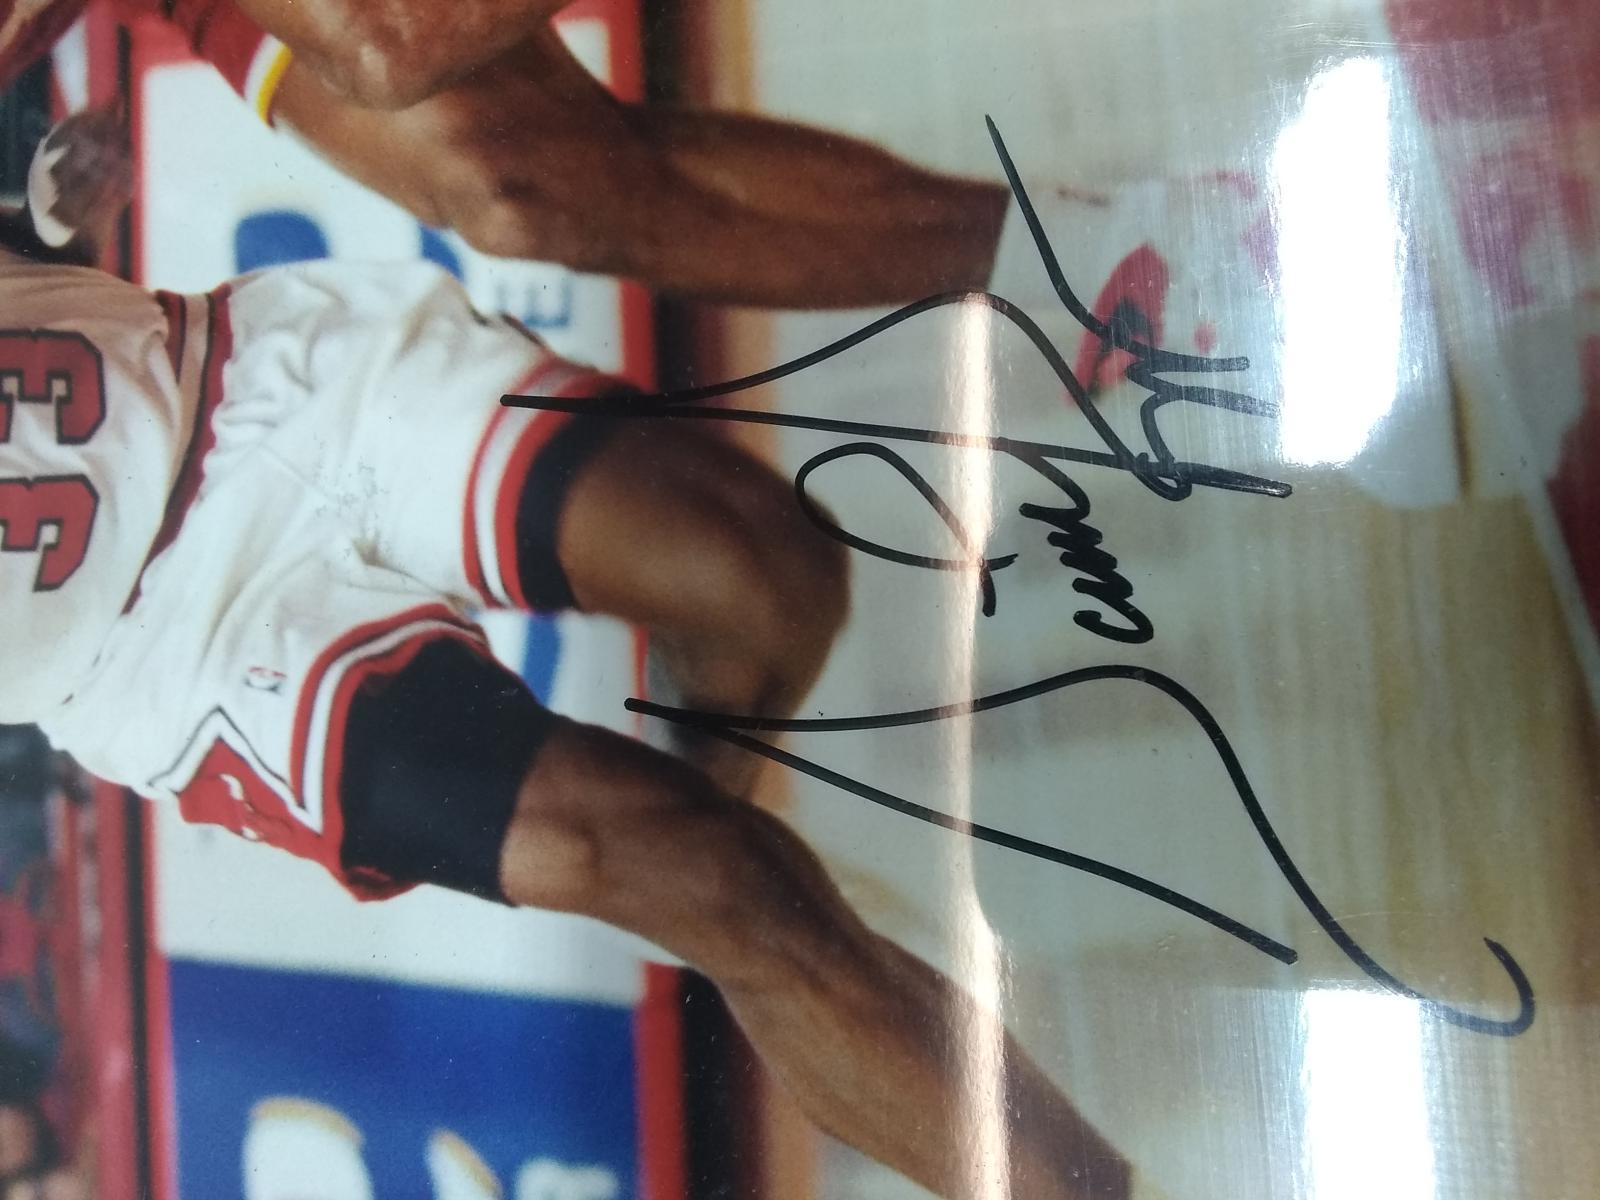 Scottie Pippen Chicago Bulls Authenticated Signed Photo Plaque